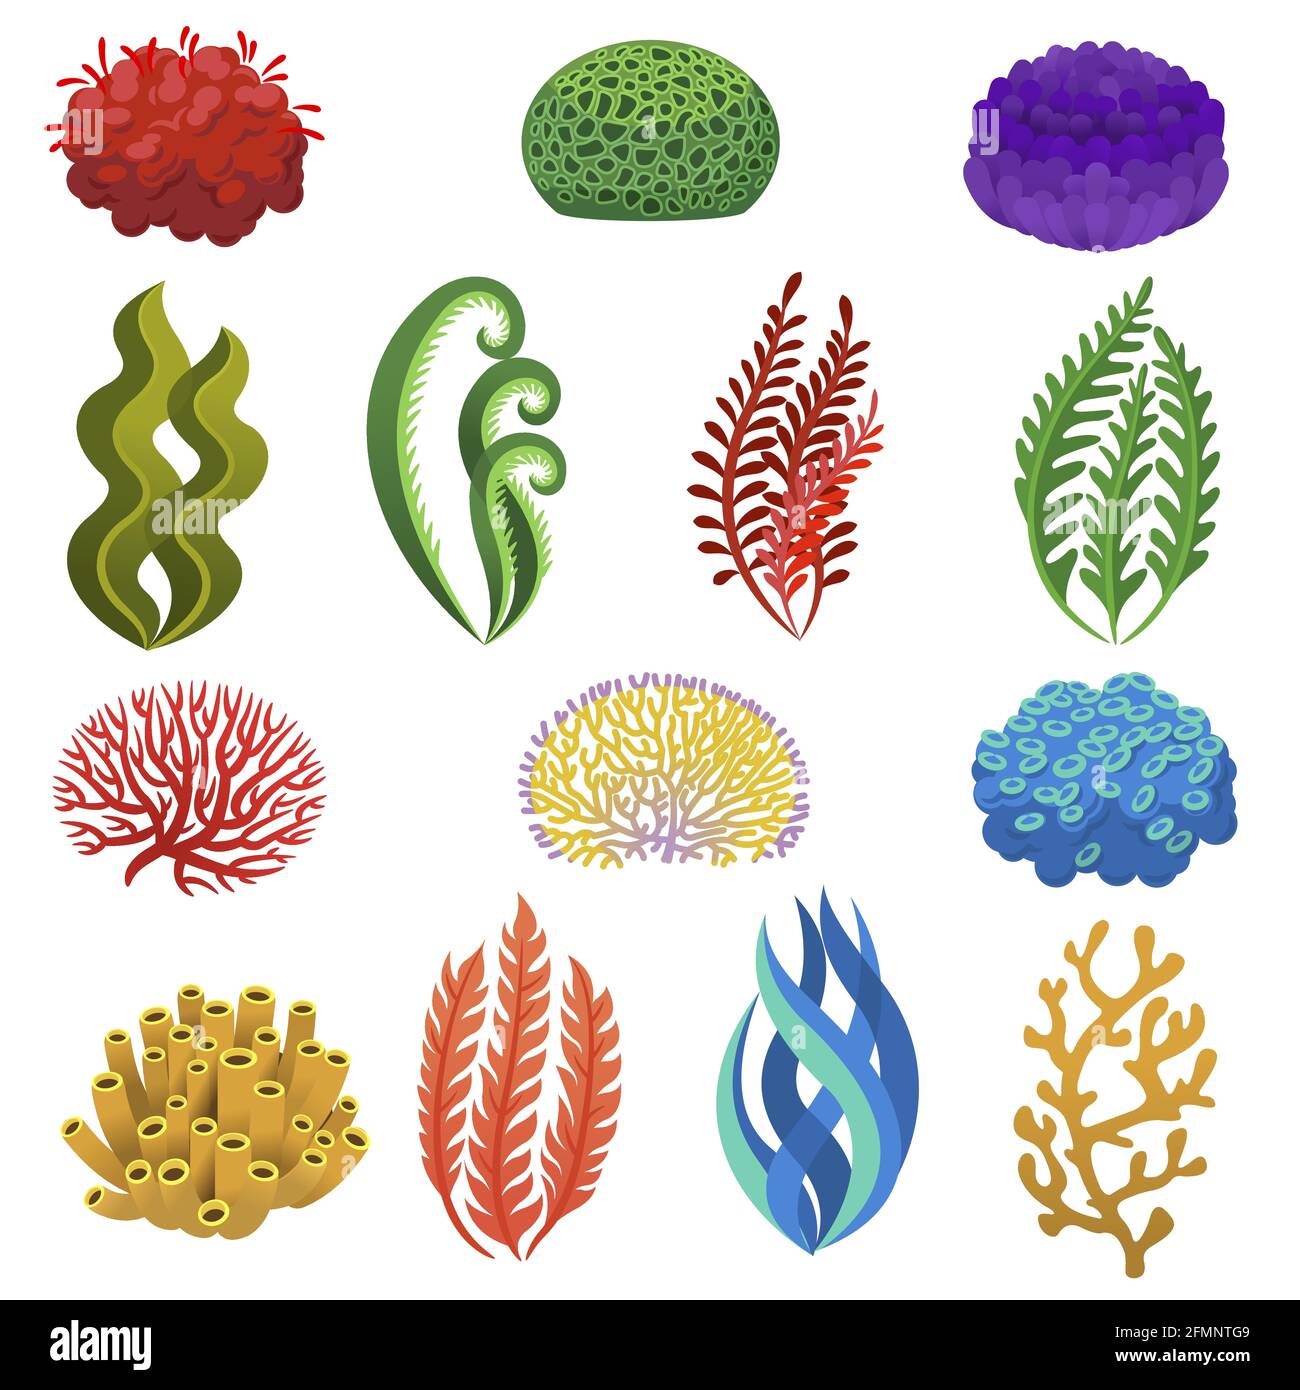 Seaweed and corals. Cartoon underwater reef plants and animals. Aquarium, ocean and sea flora, marine floral elements vector set. Anemones and algae planting seascape, aquatic icons Stock Vector